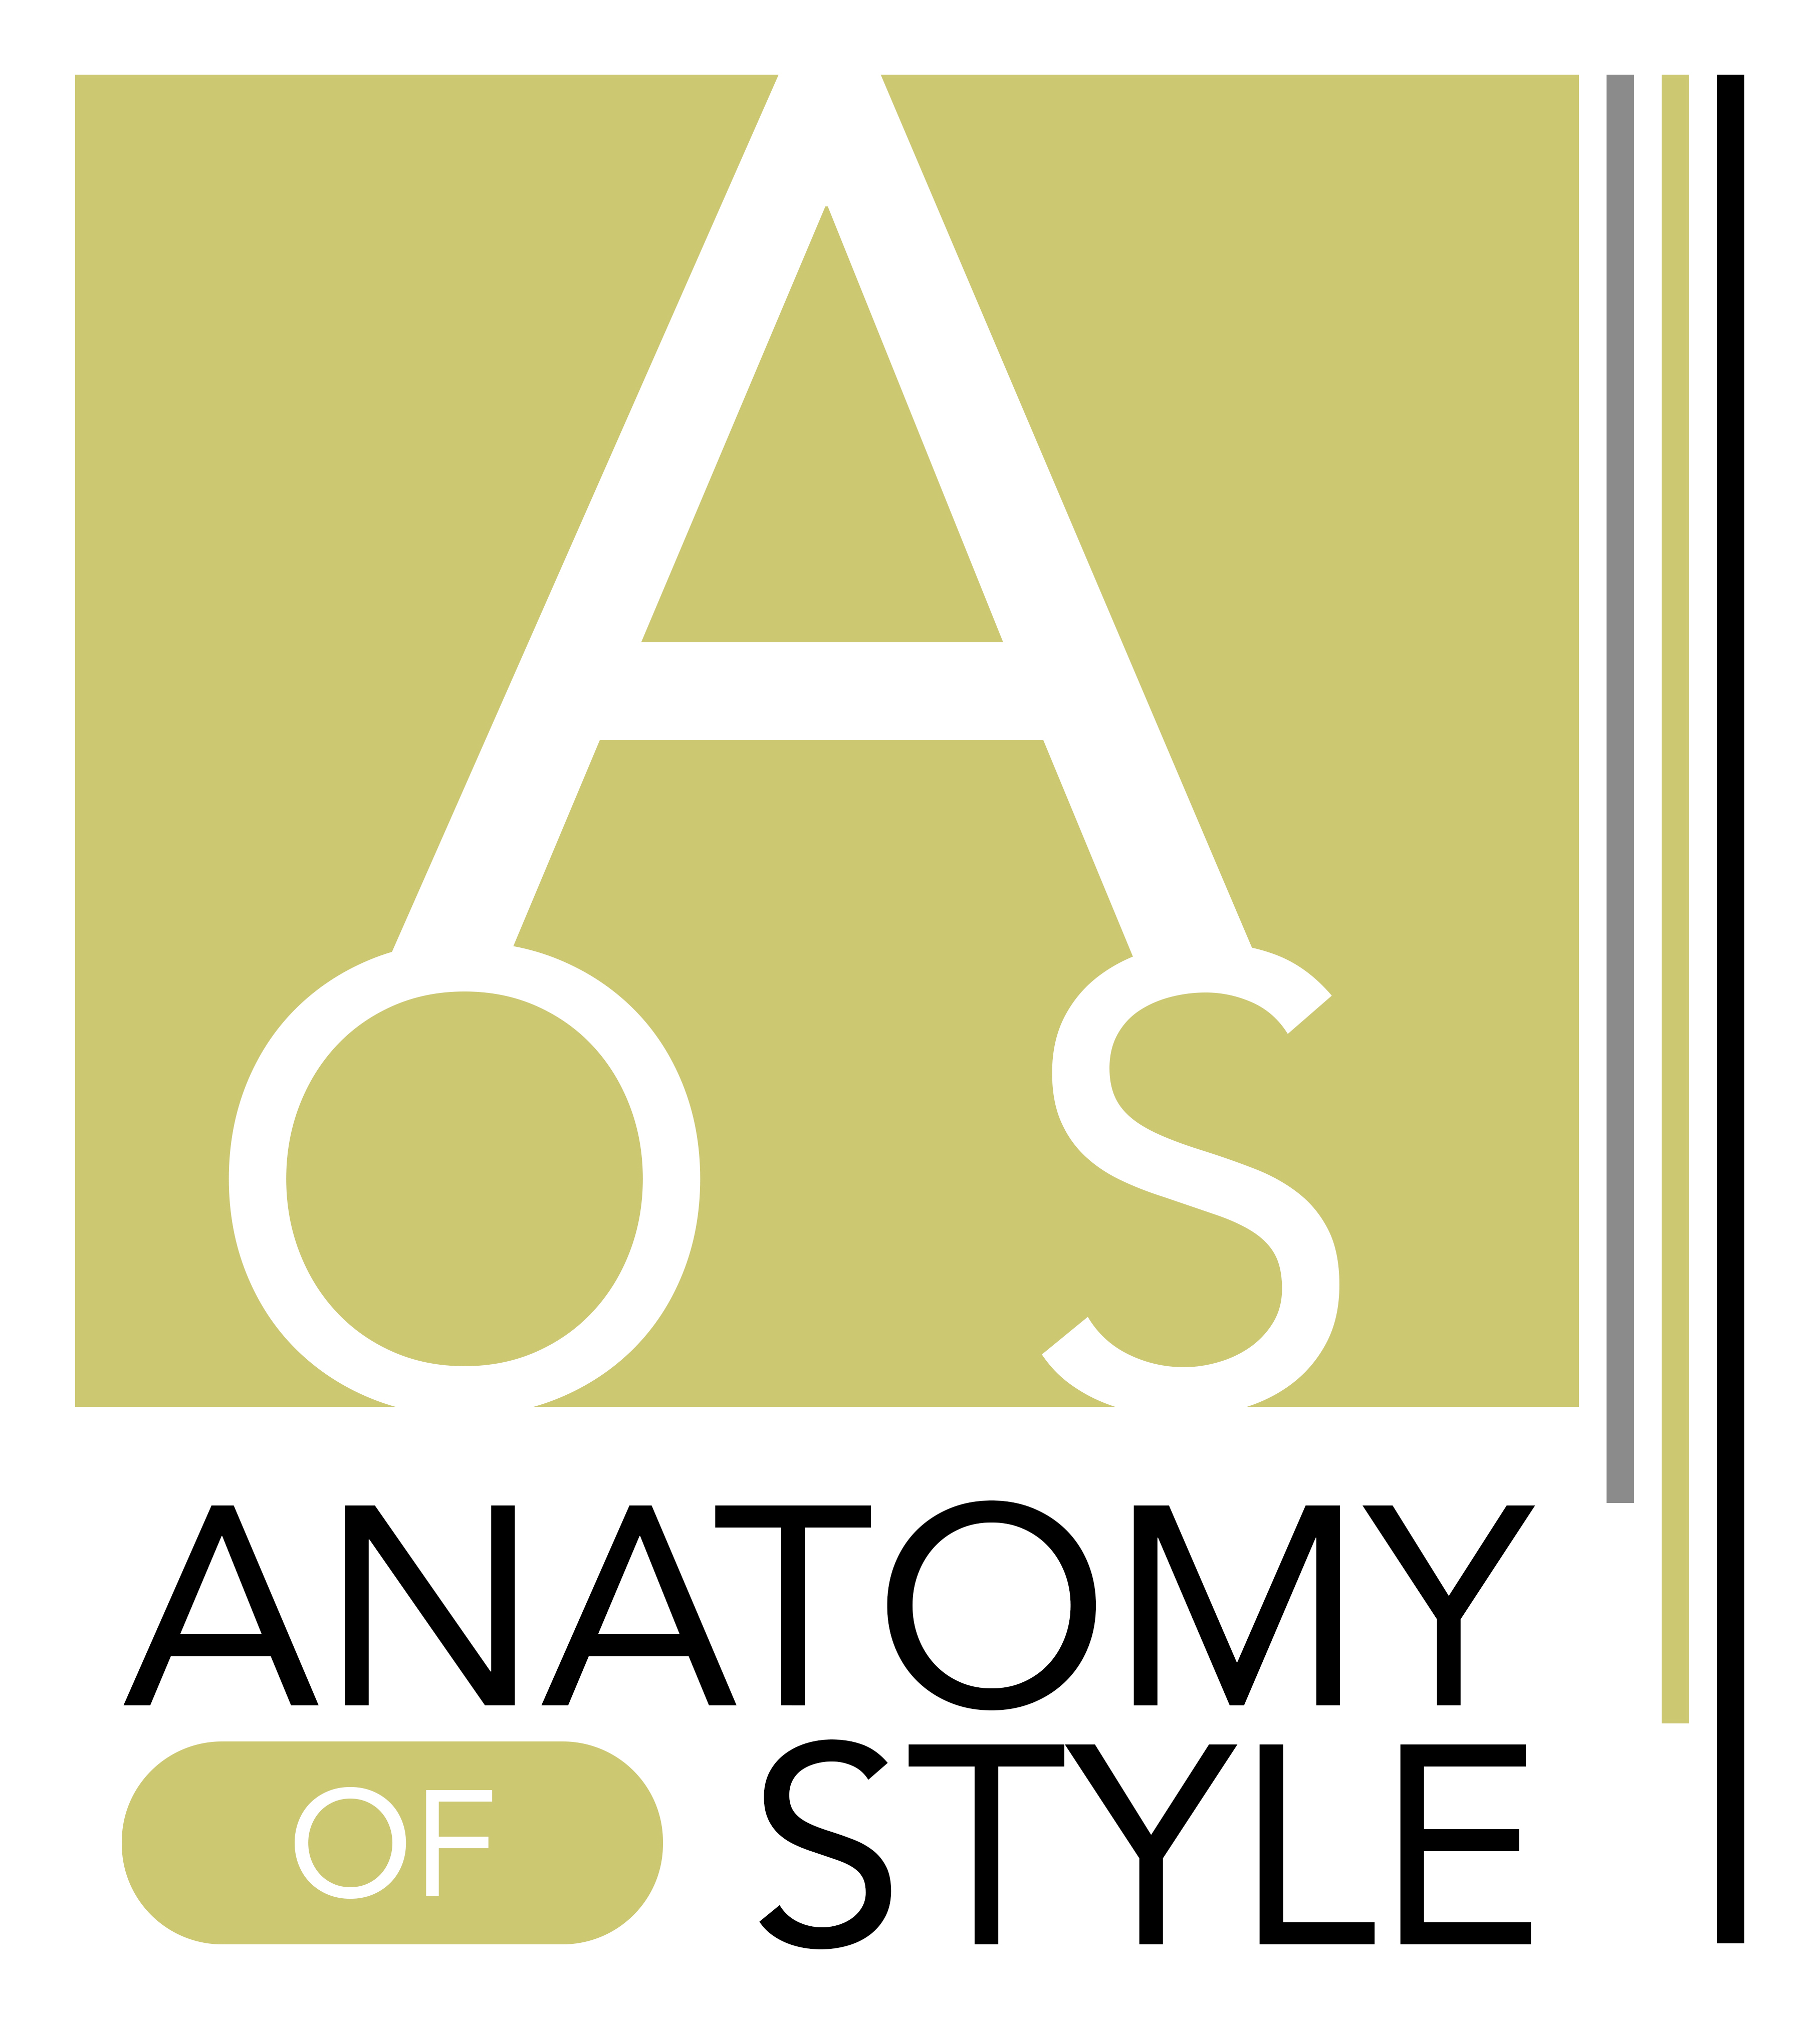 Anatomy of Style